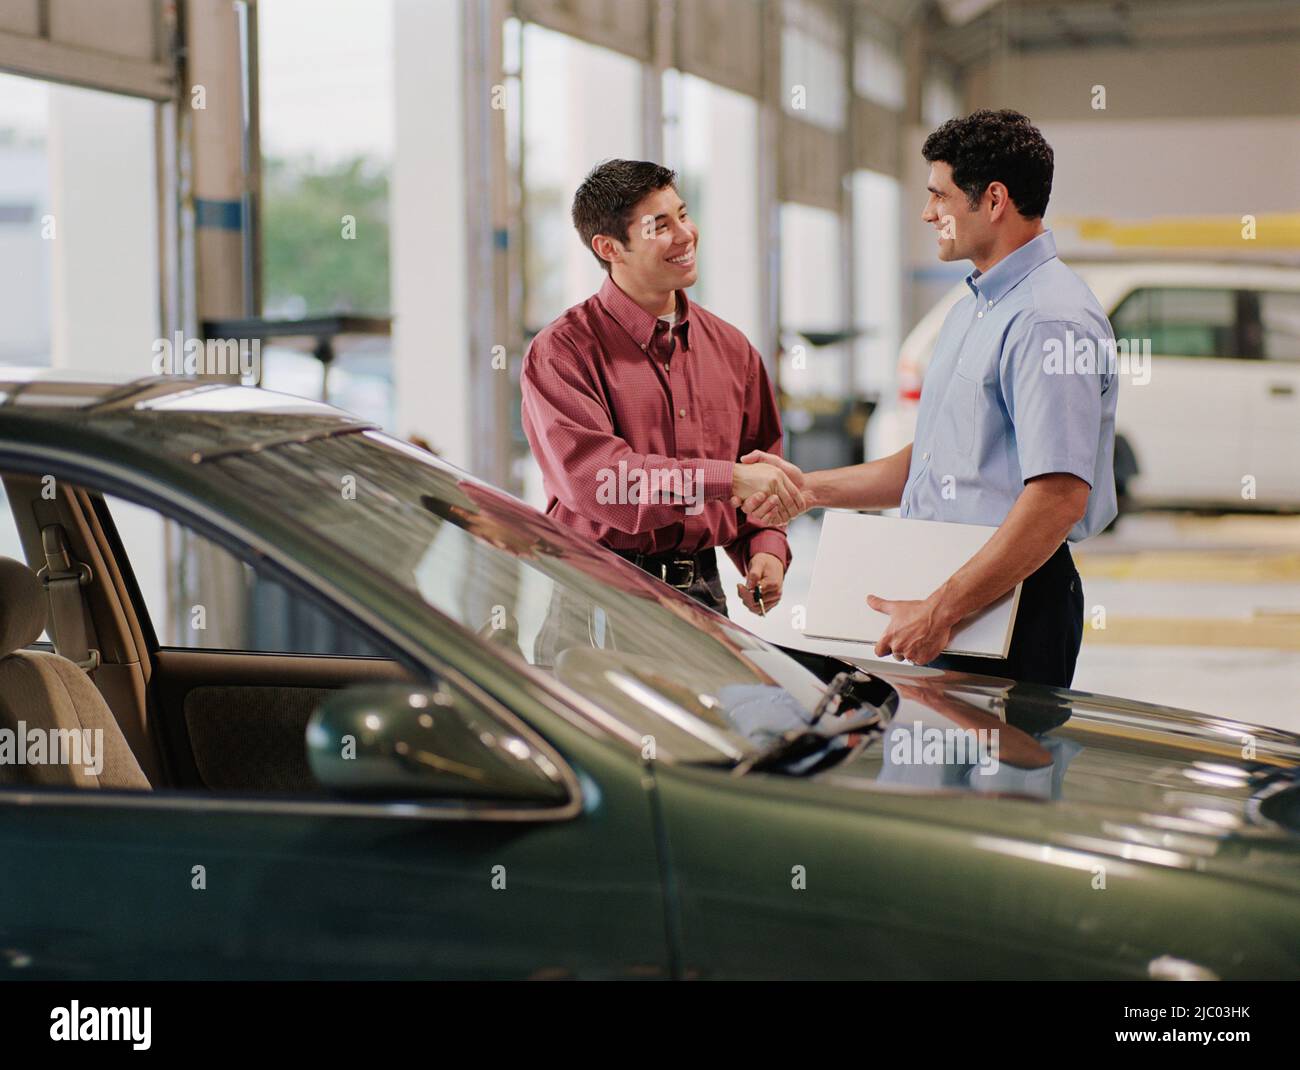 Car salesman and customer shaking hands Stock Photo